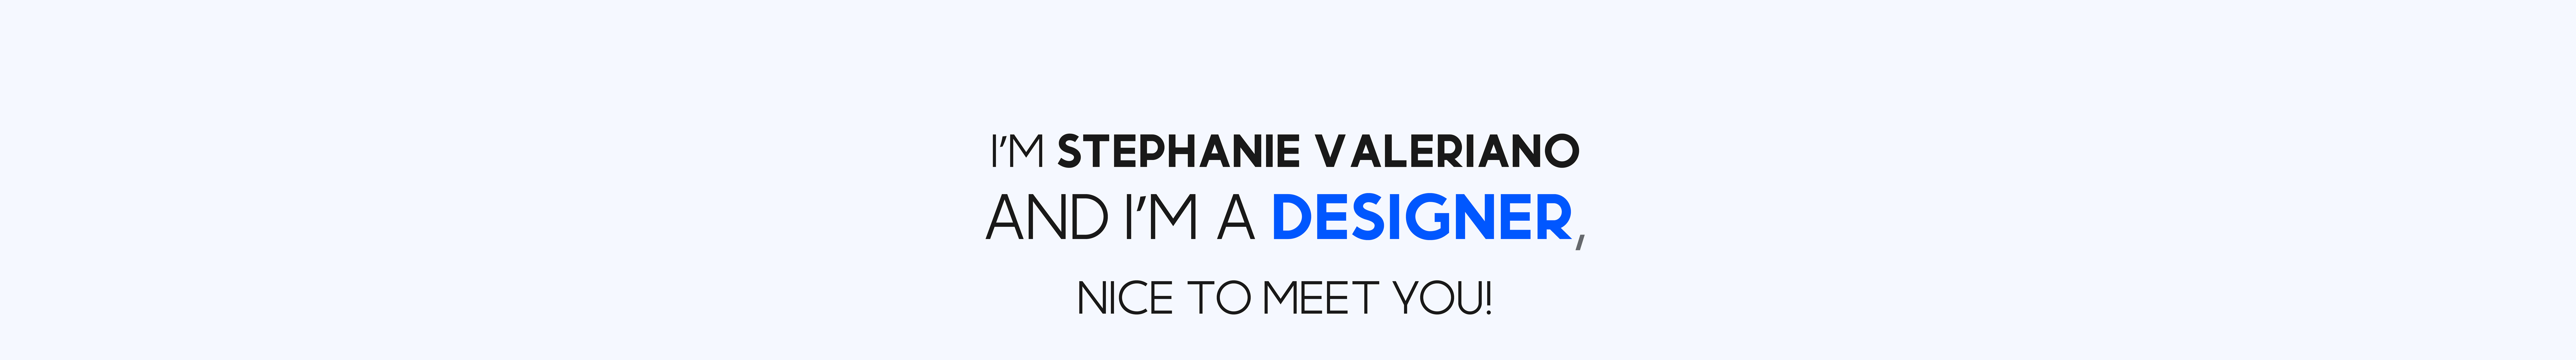 Stephanie Valerianos profilbanner